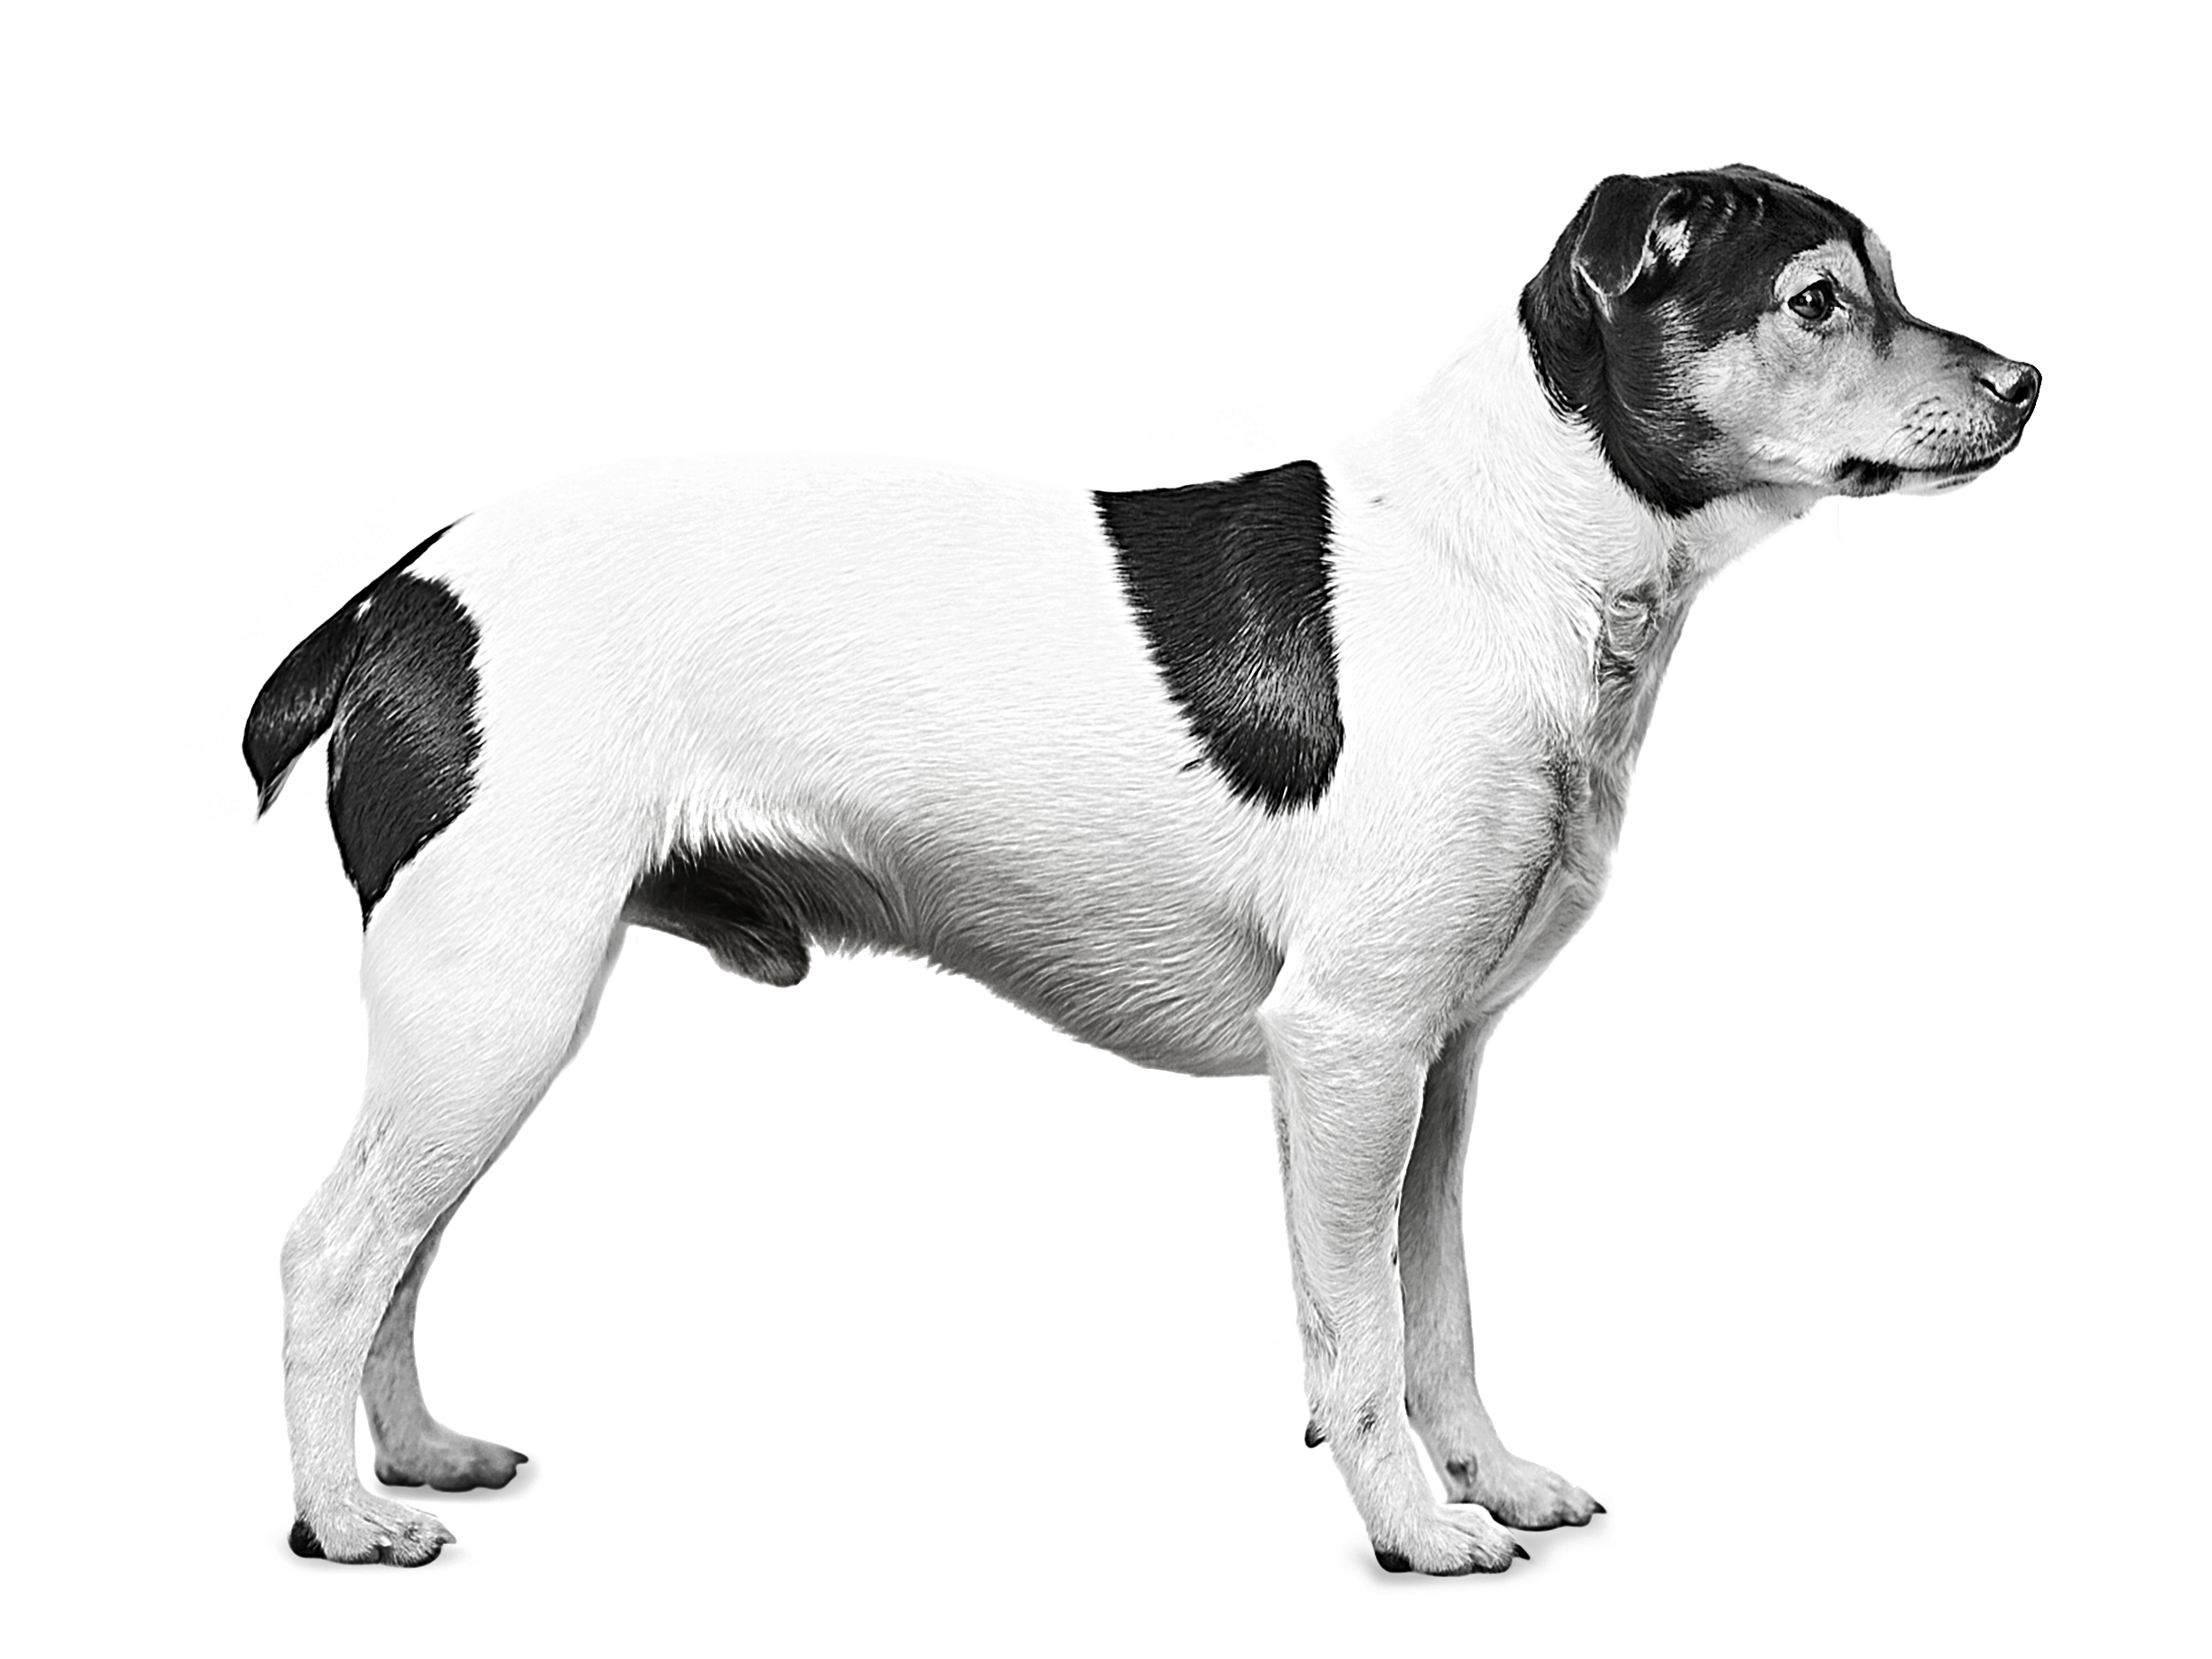 Danish-swedish farmdog black and white